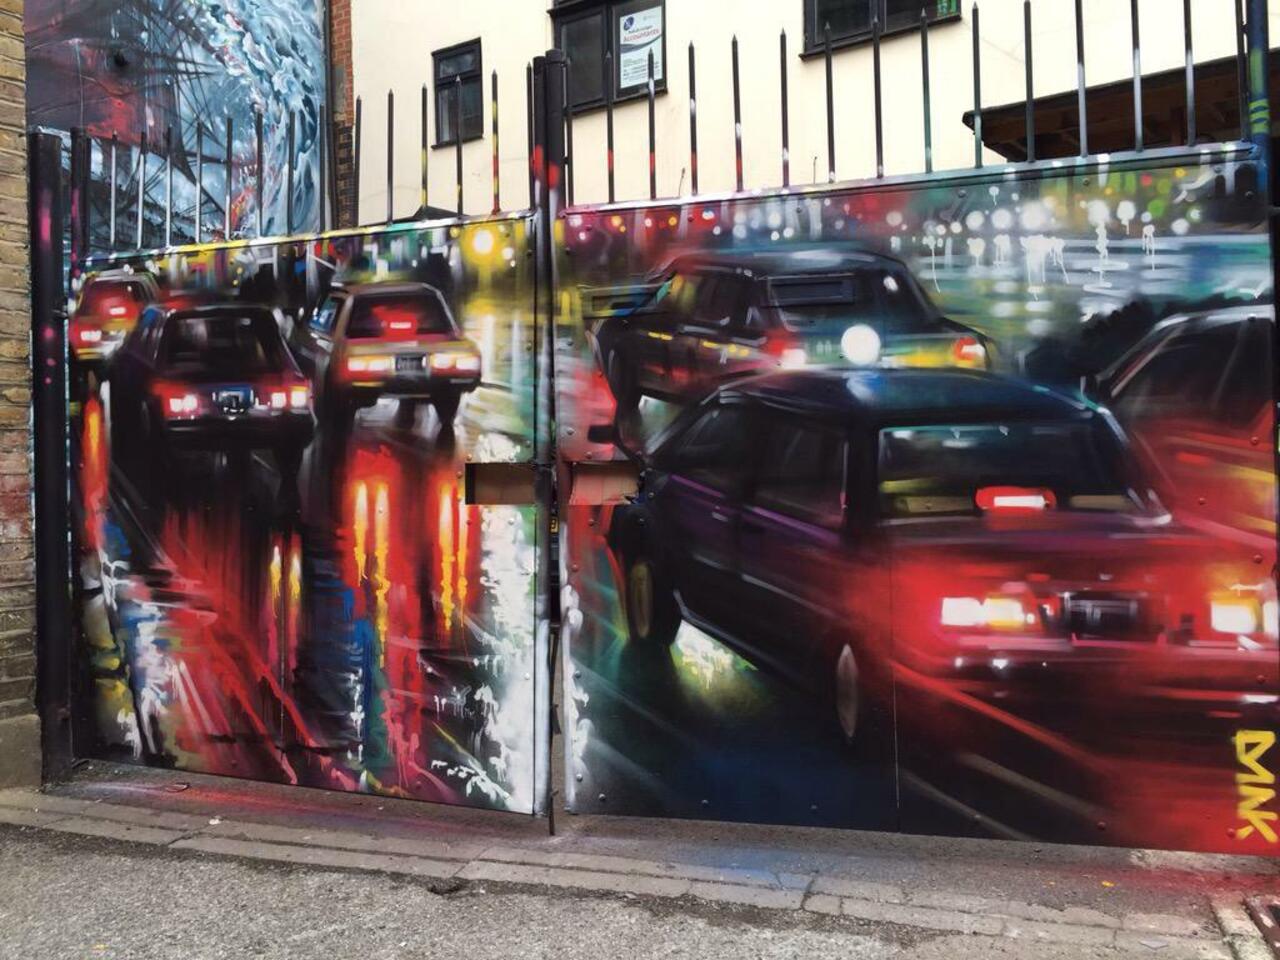 New Street Art by DanKitchener in Brick Lane London 

#art #graffiti #mural #streetart http://t.co/8ibVcex3KC